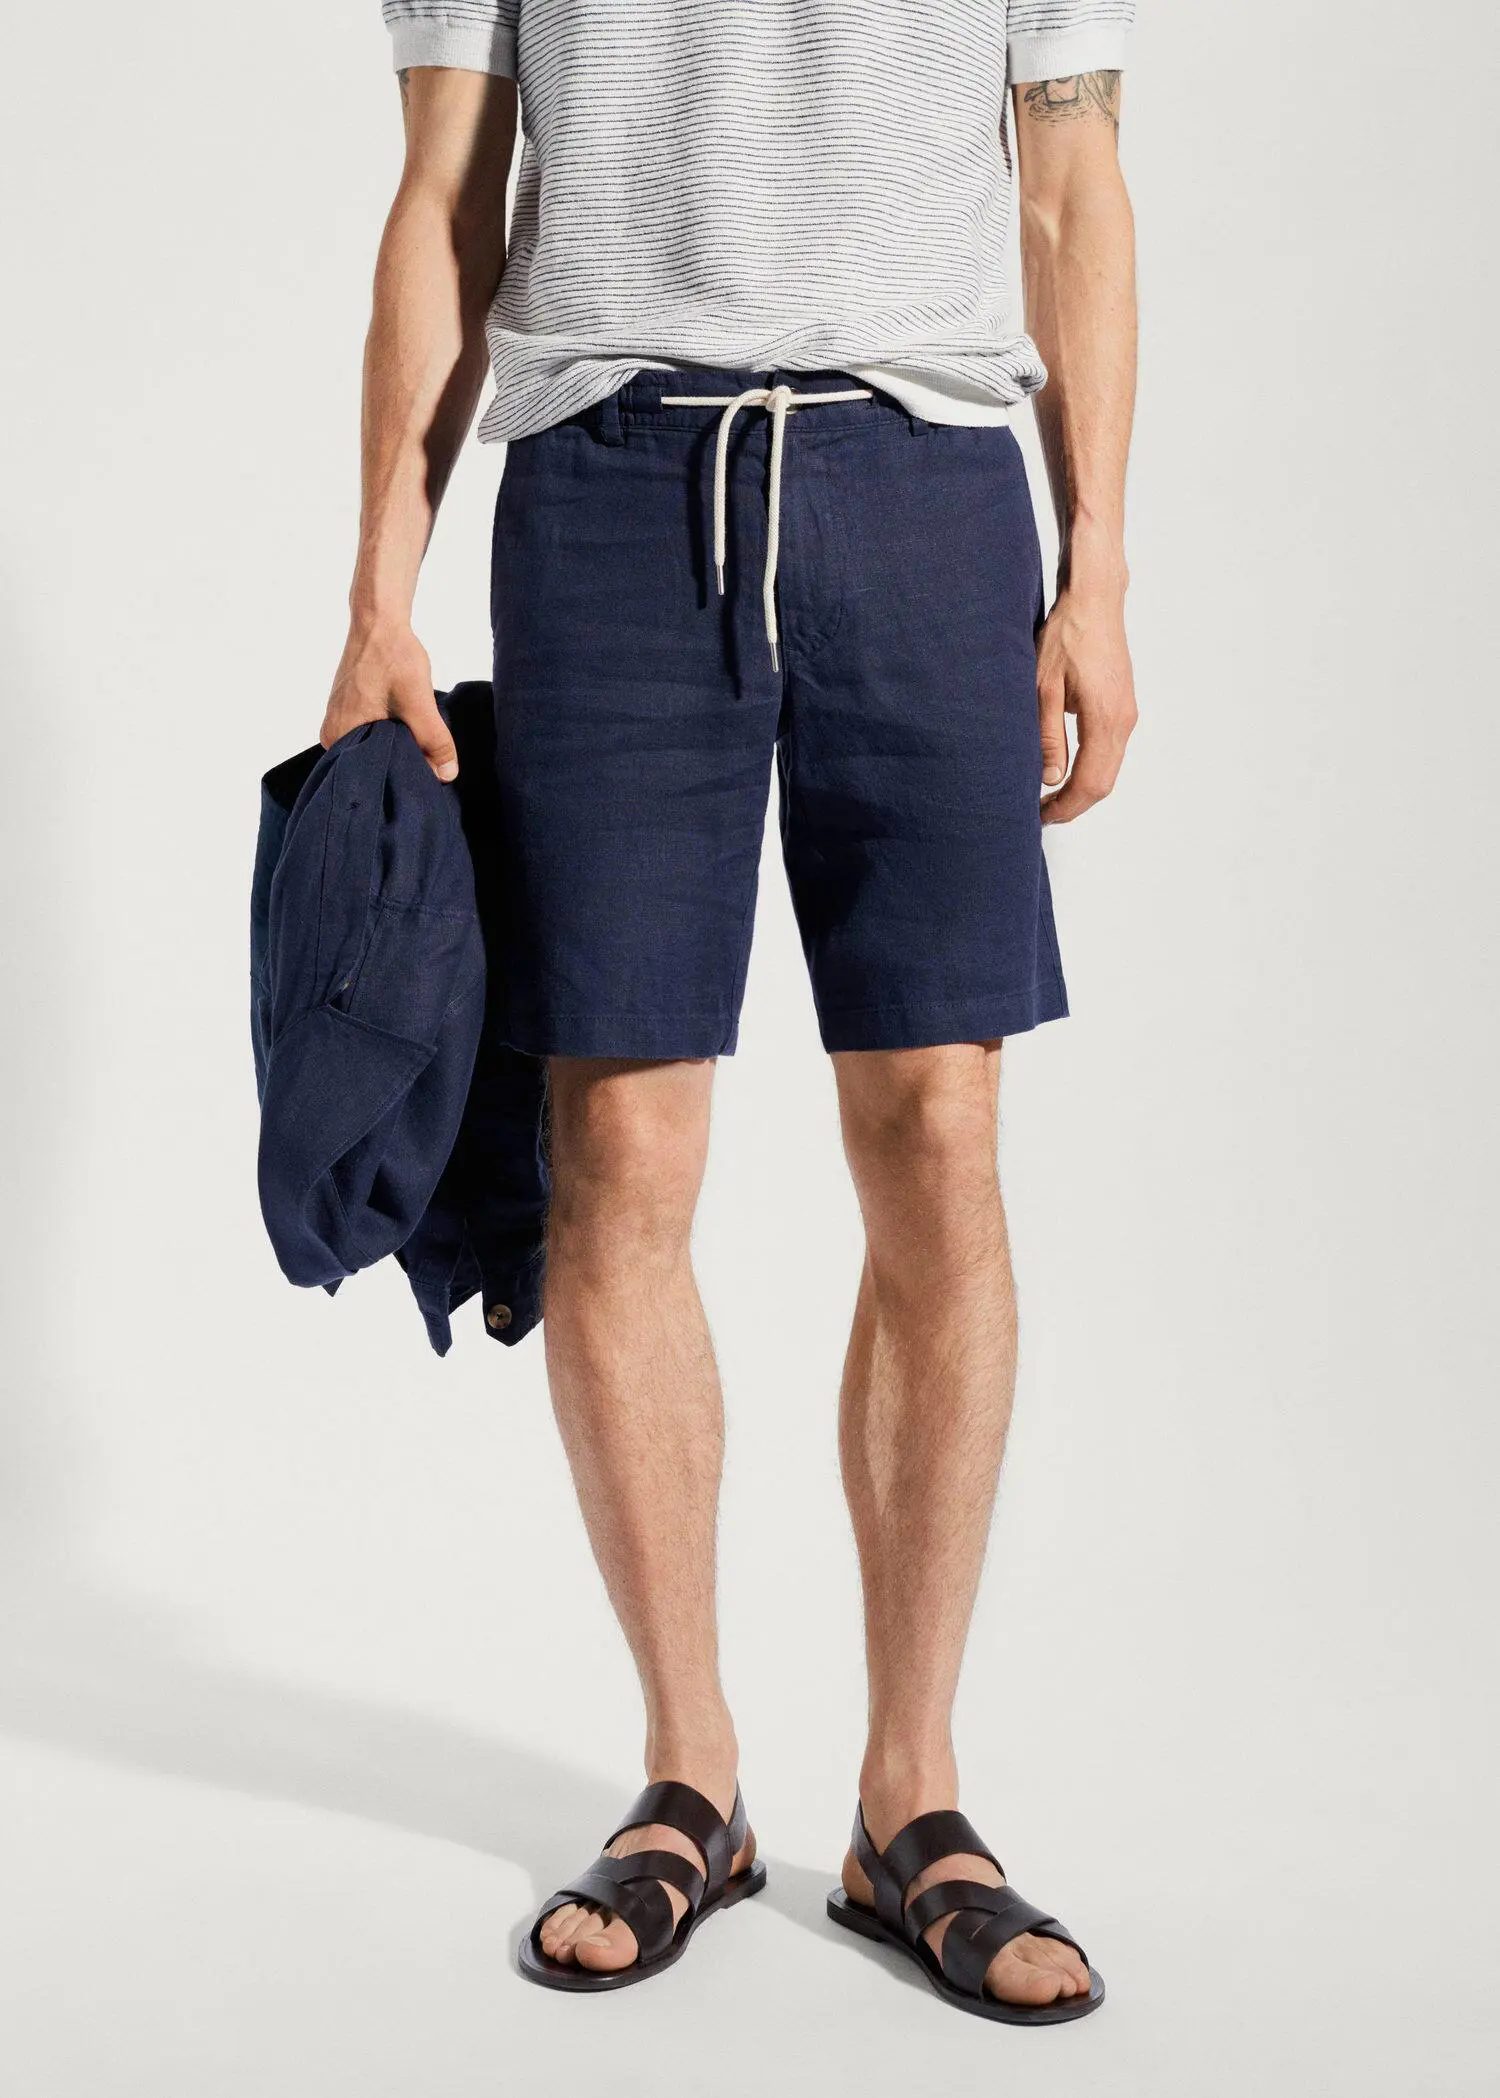 Mango 100% linen bermuda shorts with drawstring. a man in blue shorts holding a jacket. 